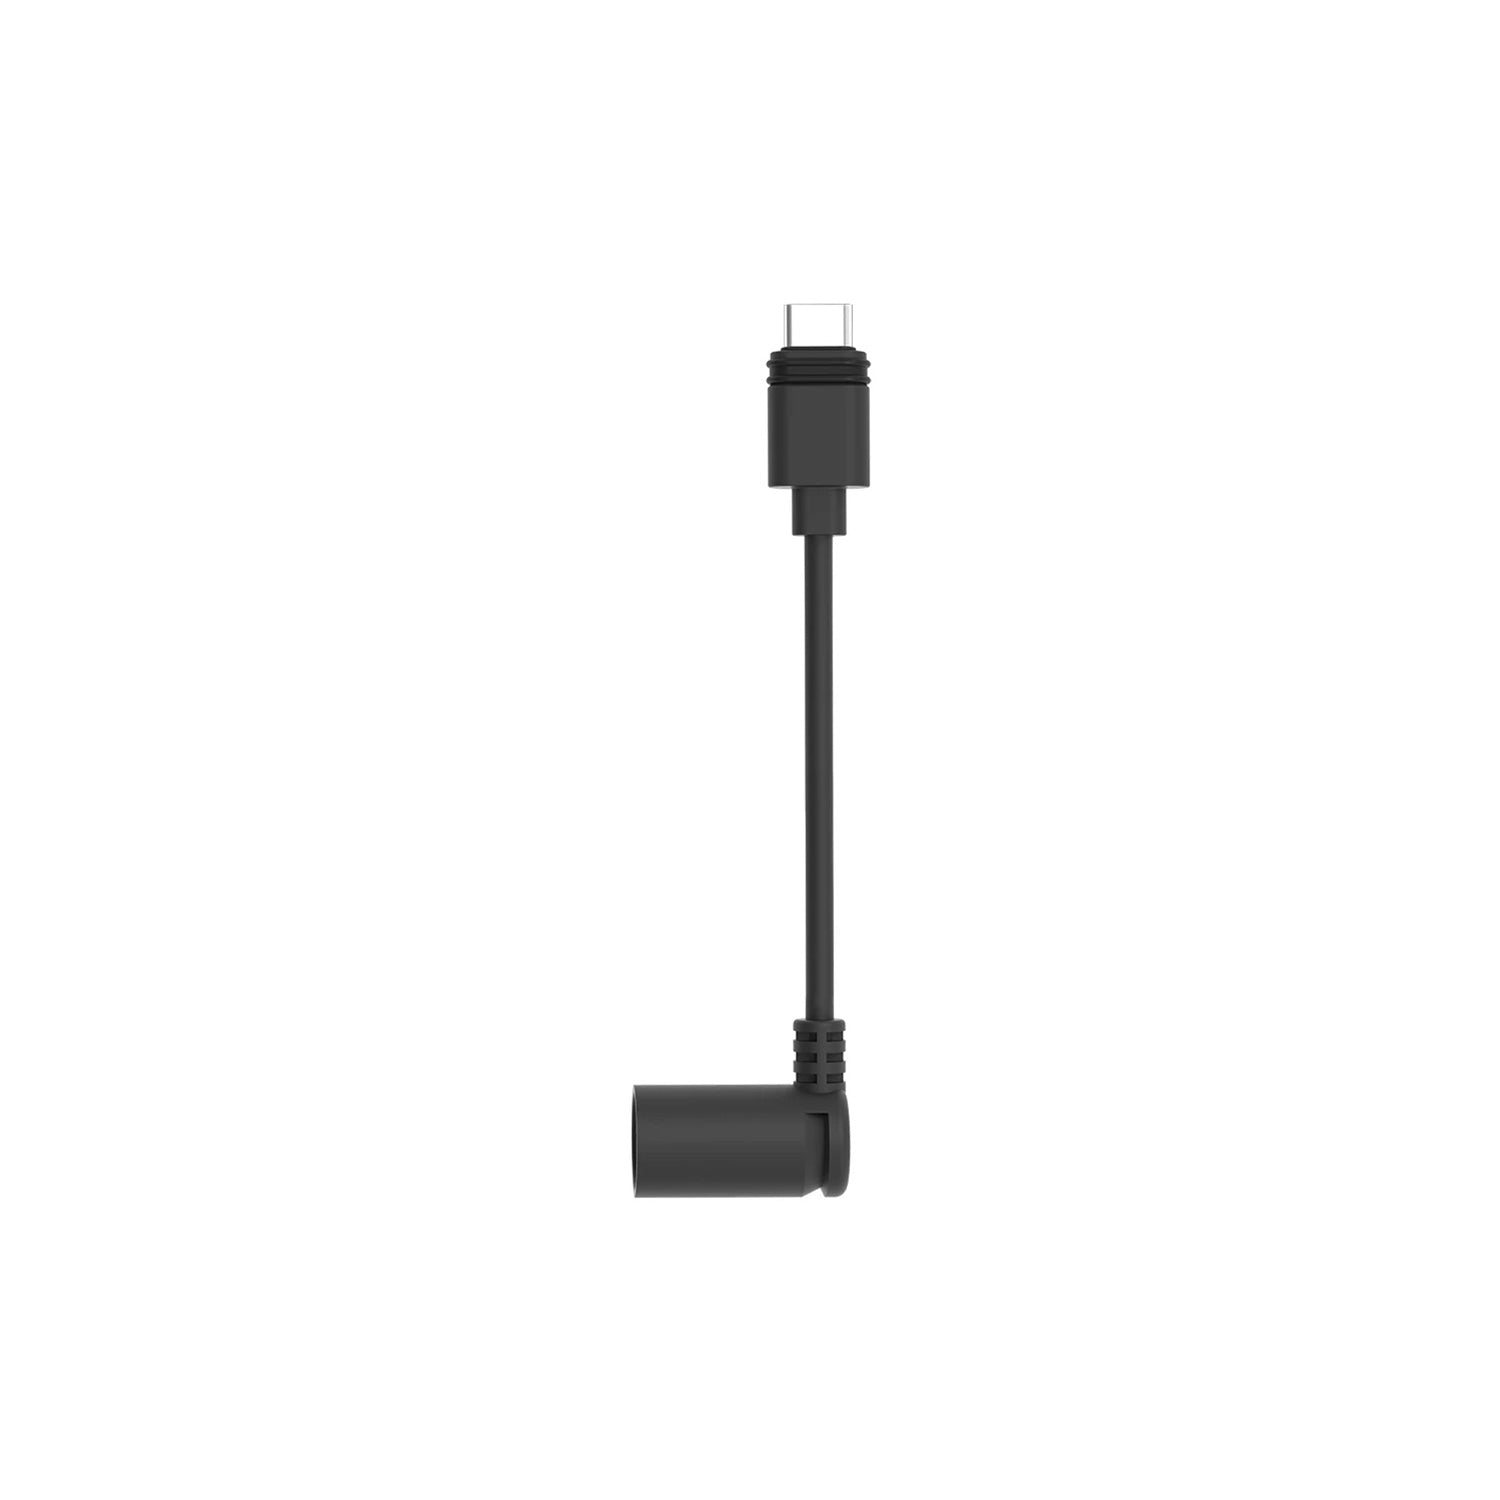 Barrel Plug to USB-C Adapter (for Barrel Plug Solar Panels and USB-C Security Cams) - Black